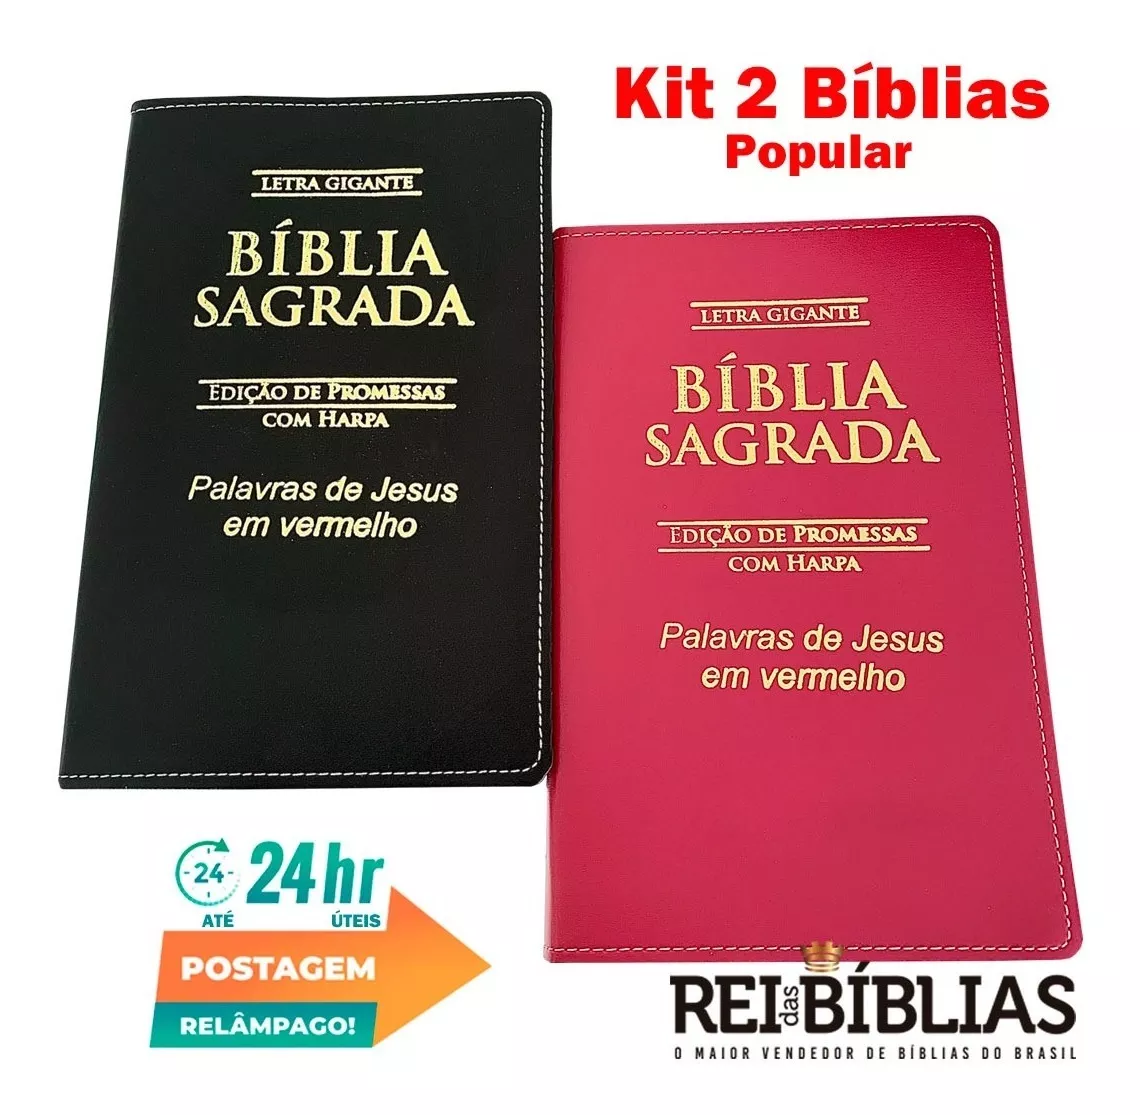 Kit 2 Biblias Letra Gigante Luxo Popular - Preta E Pink Rc